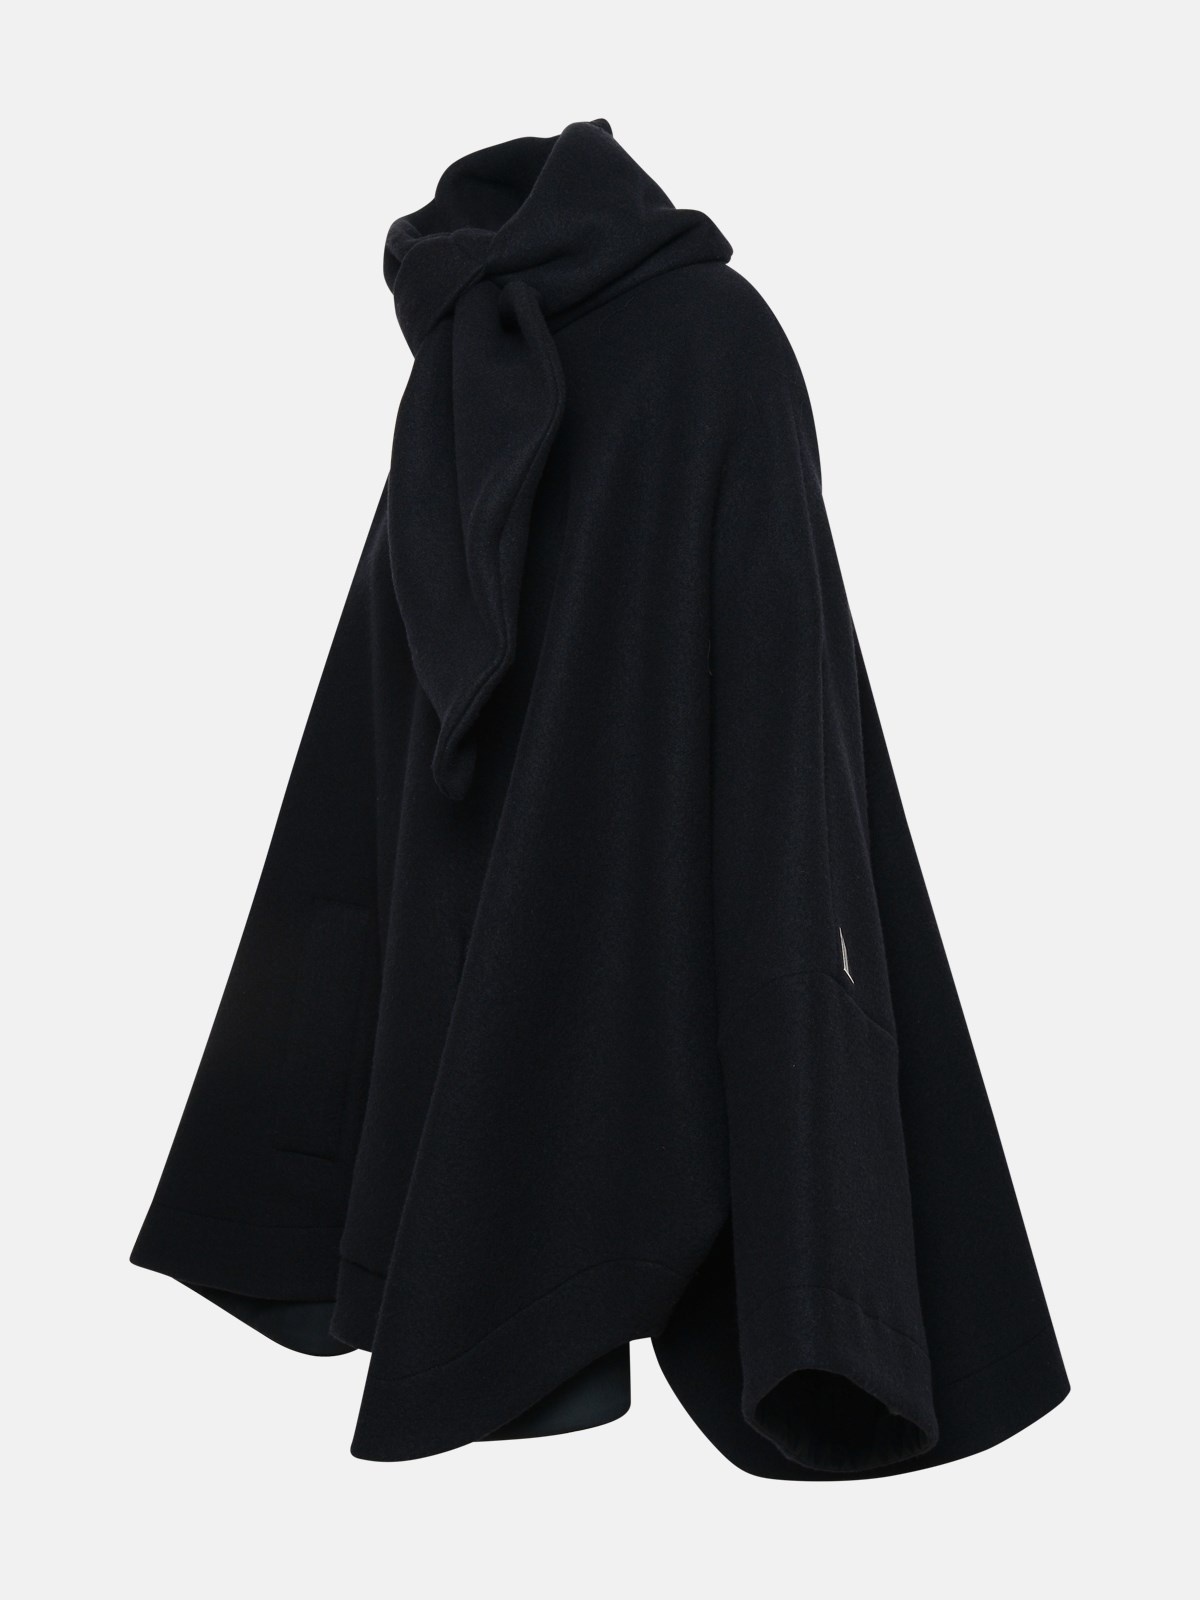 Black virgin wool blend cape - 2